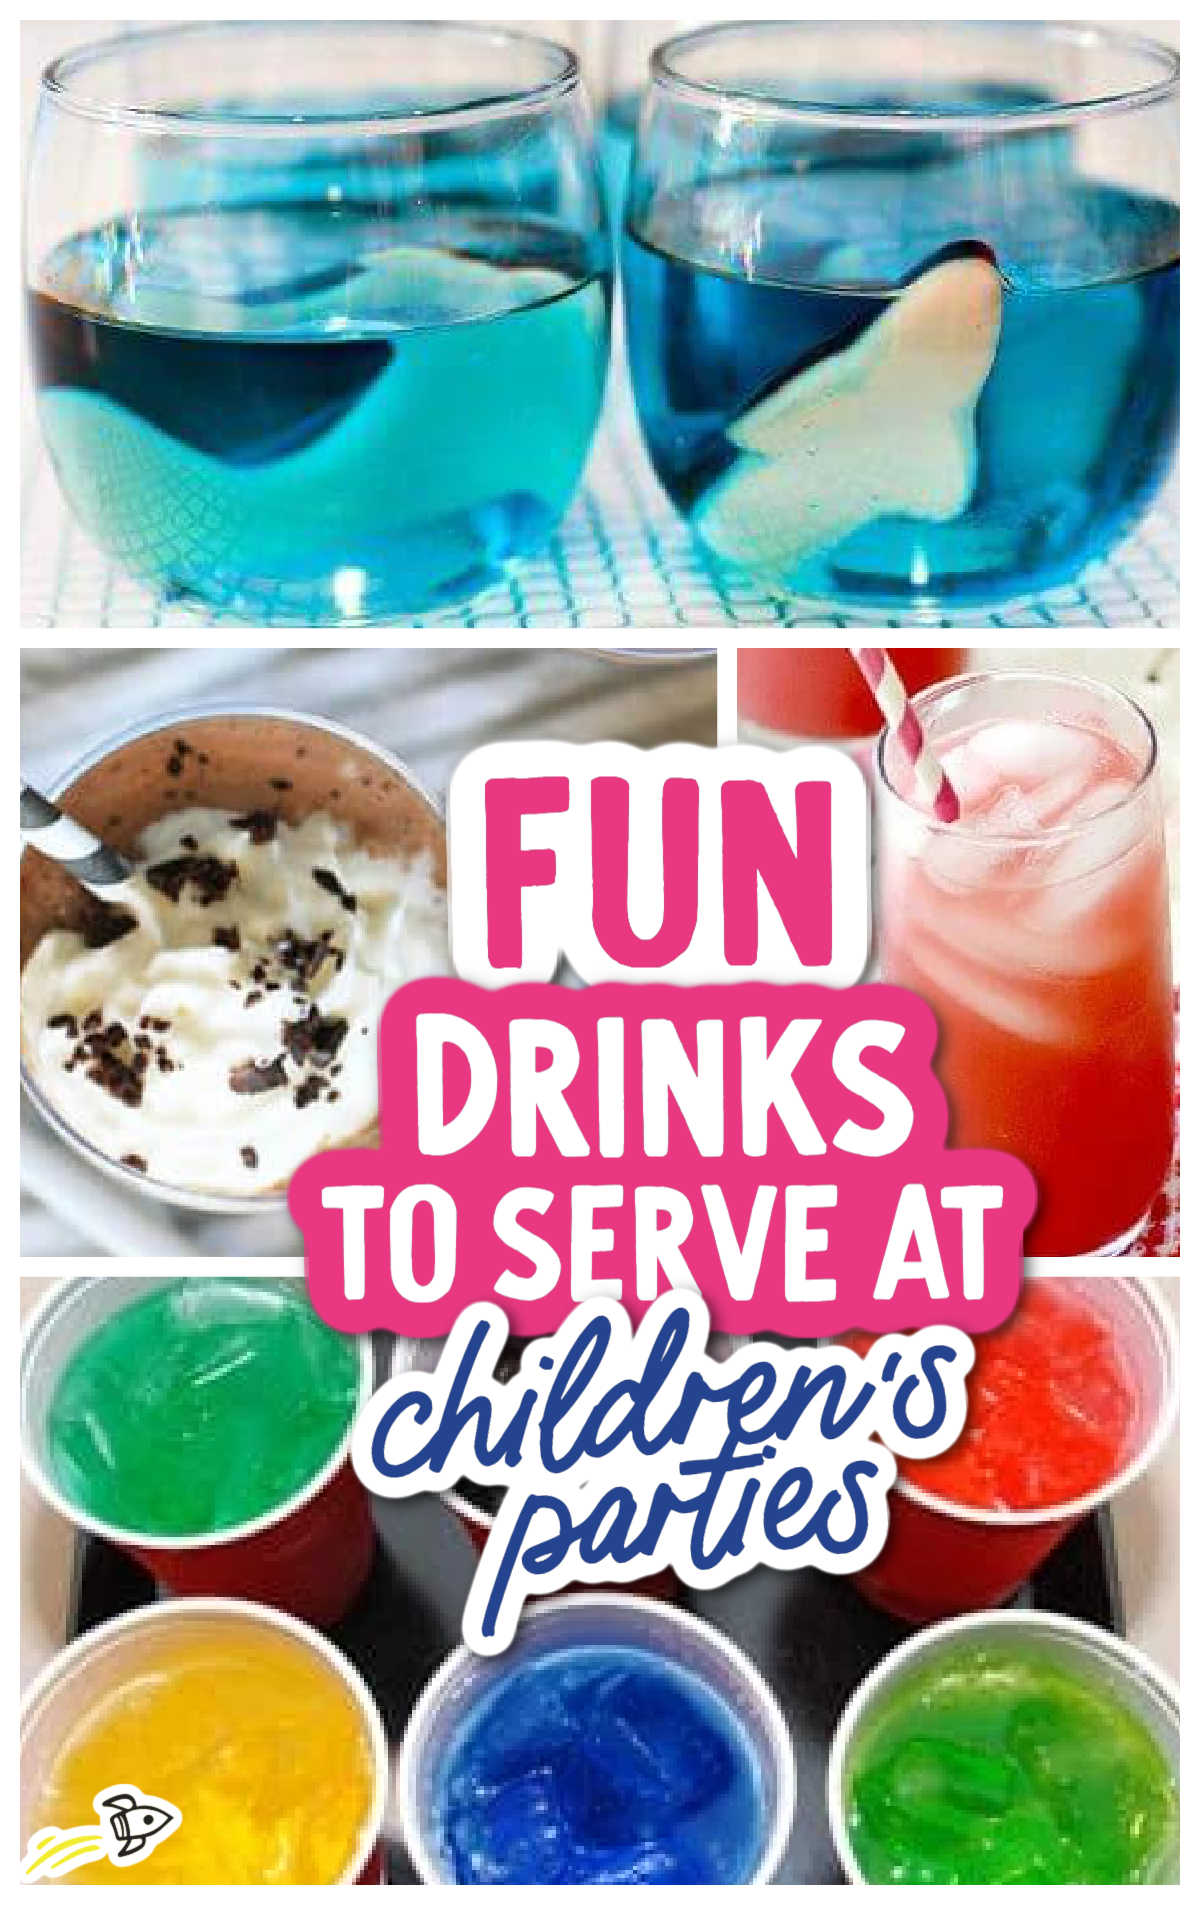 https://spaceshipsandlaserbeams.com/wp-content/uploads/2018/11/10-Fun-drinks-to-Serve-at-Childrens-Parties-Hero-1.jpg